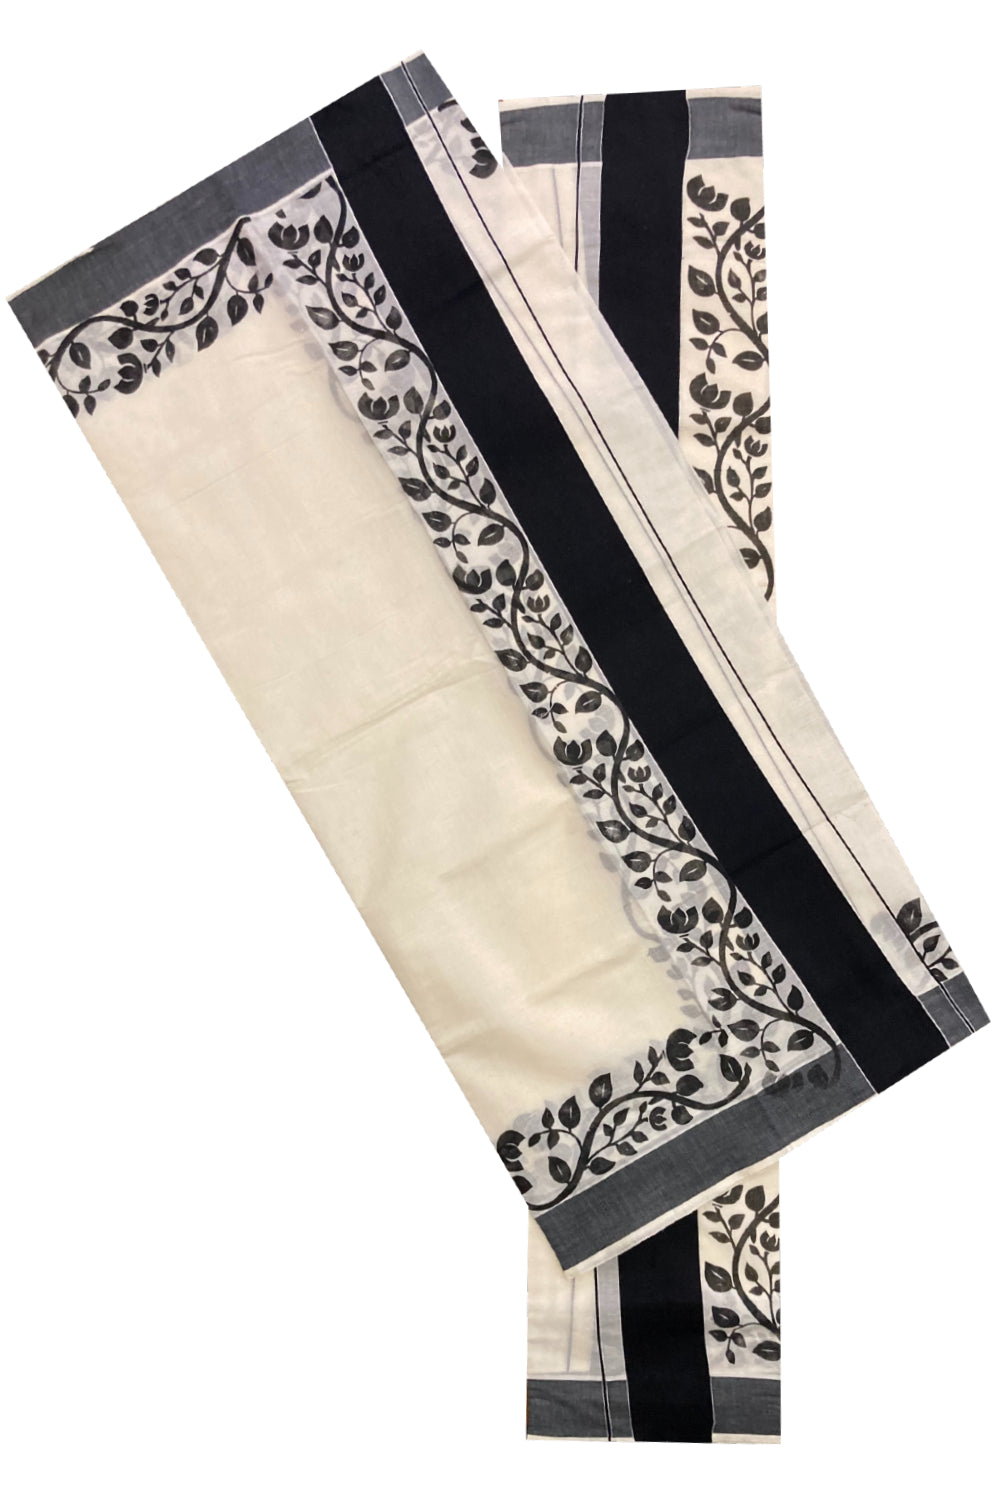 Southloom Original Design Single Set Mundu (Mundum Neriyathum) with Black Floral Vines Block Print